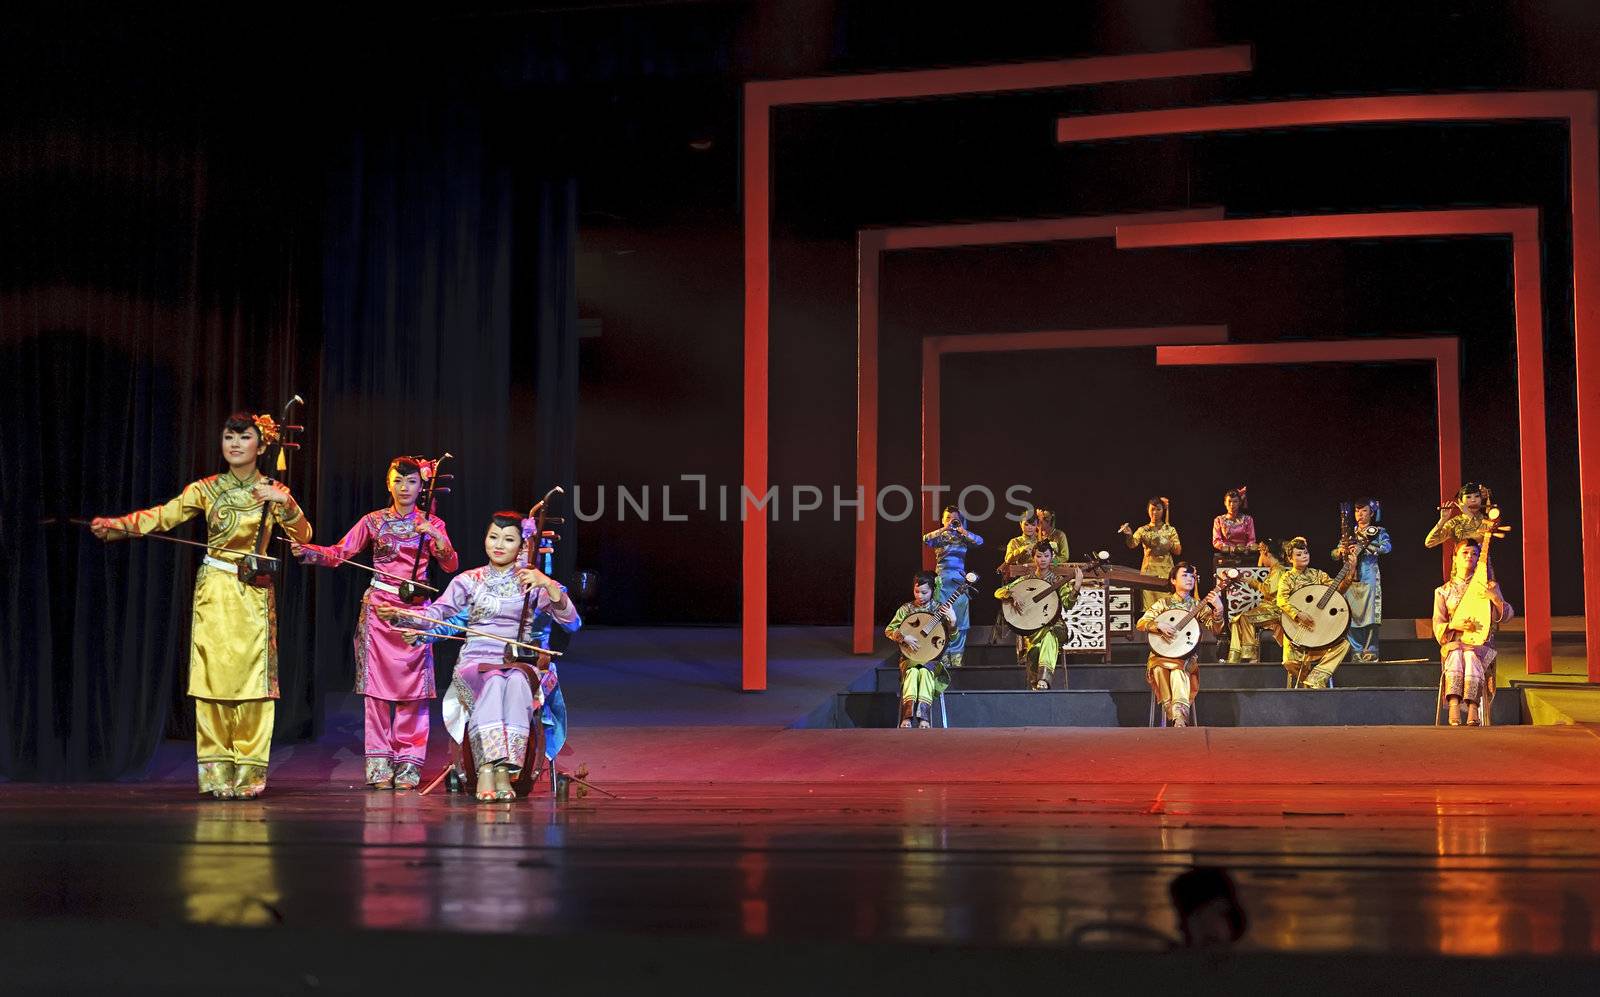 CHENGDU - JUN 17: chinese traditional folk instrumental concert performance on stage at shengge theater.Jun 17, 2011 in Chengdu, China.